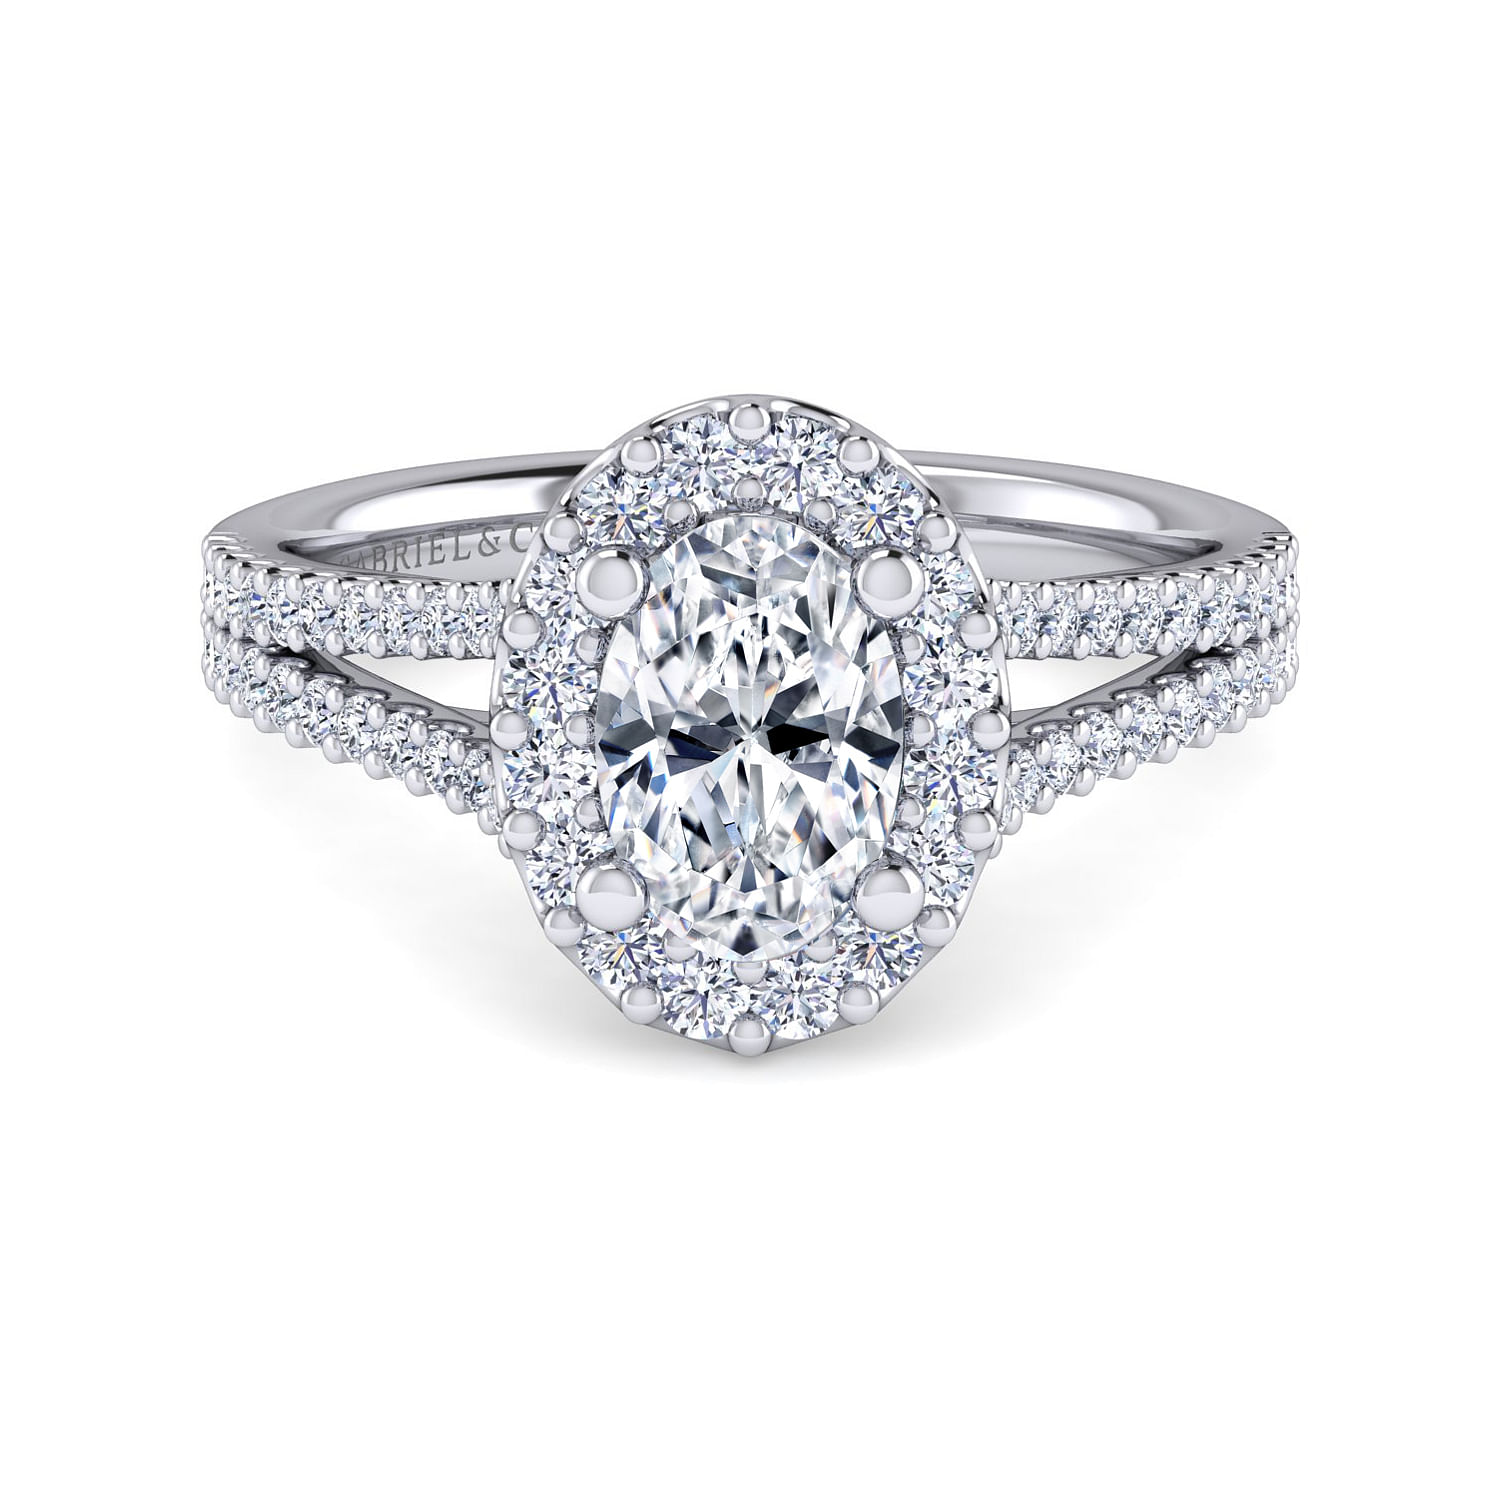 Savannah - 14K White Gold Oval Halo Diamond Engagement Ring